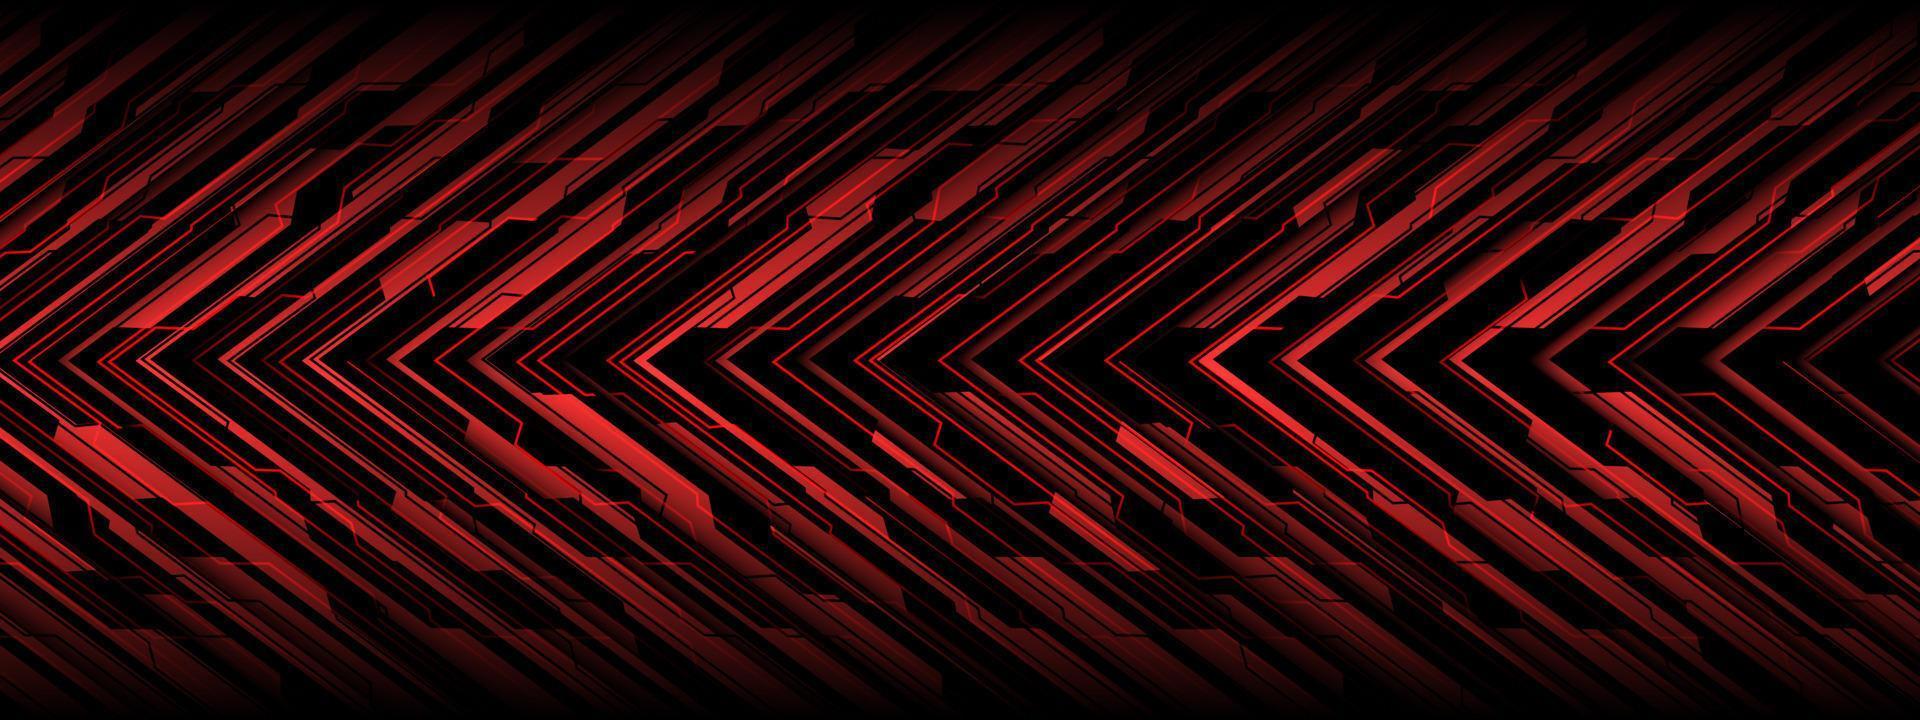 abstract rood stroomkring cyber zwart pijl richting meetkundig technologie ontwerp futuristische achtergrond vector